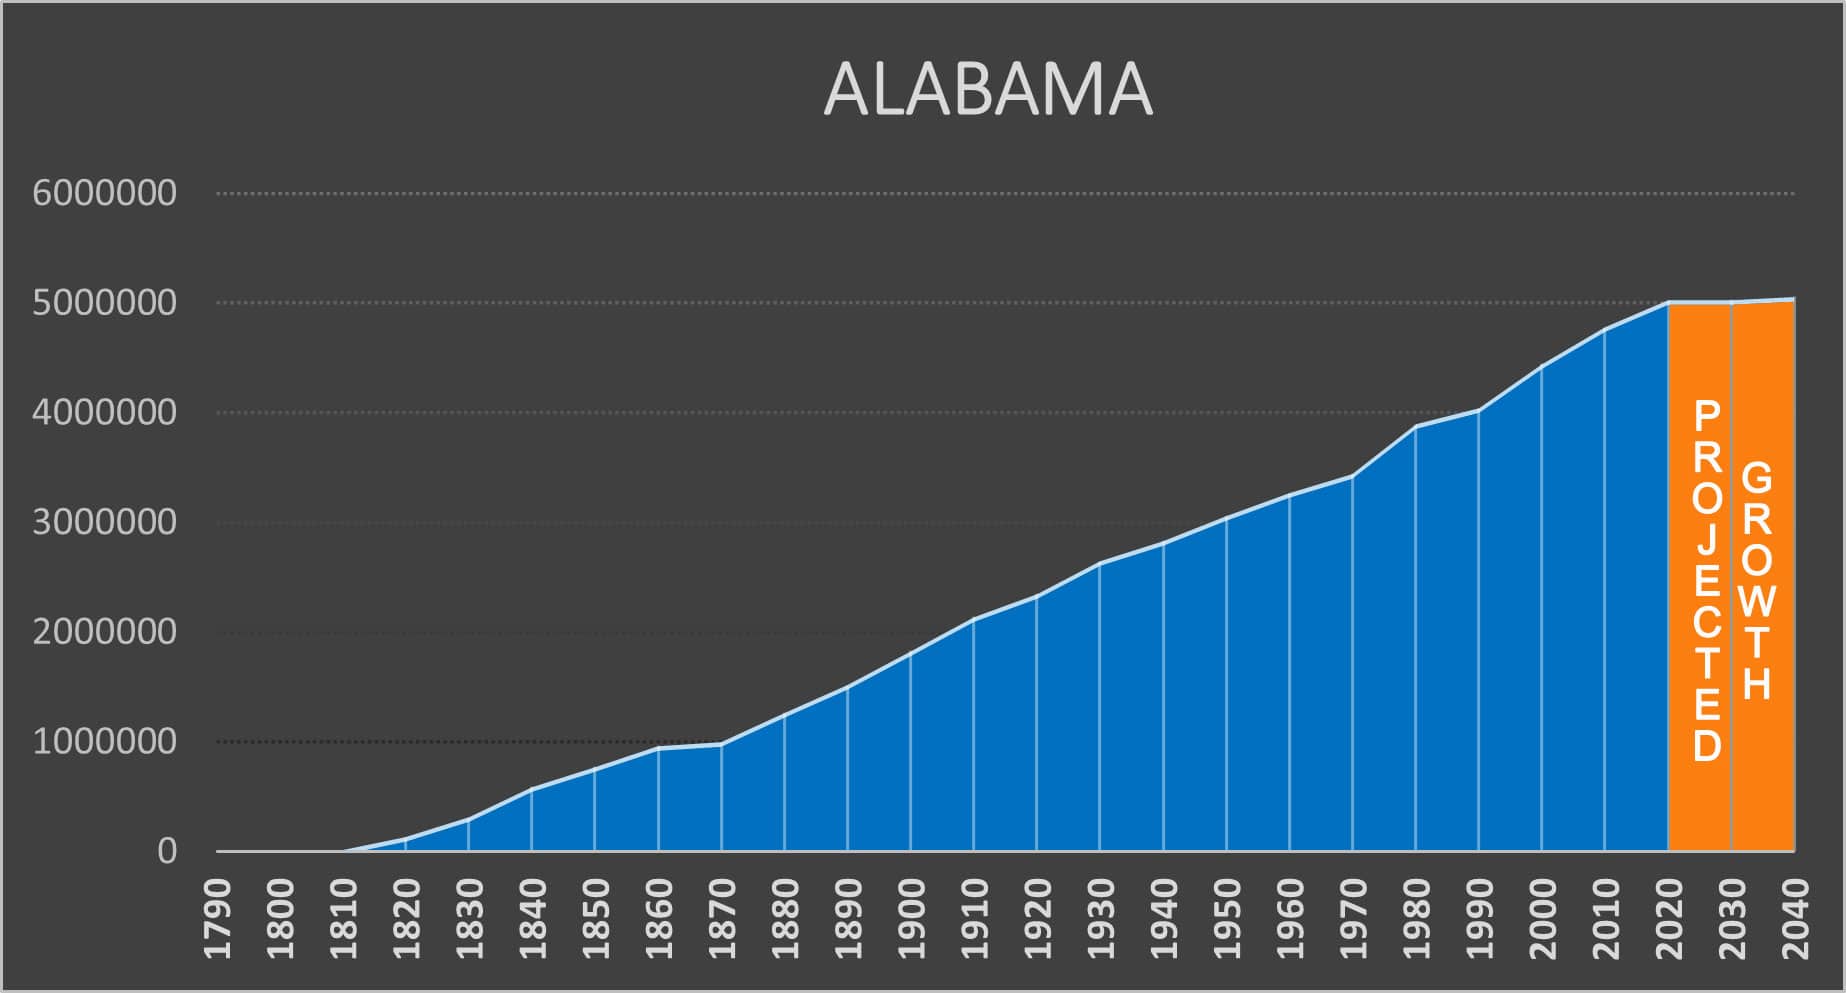 Alabama Negative Population Growth